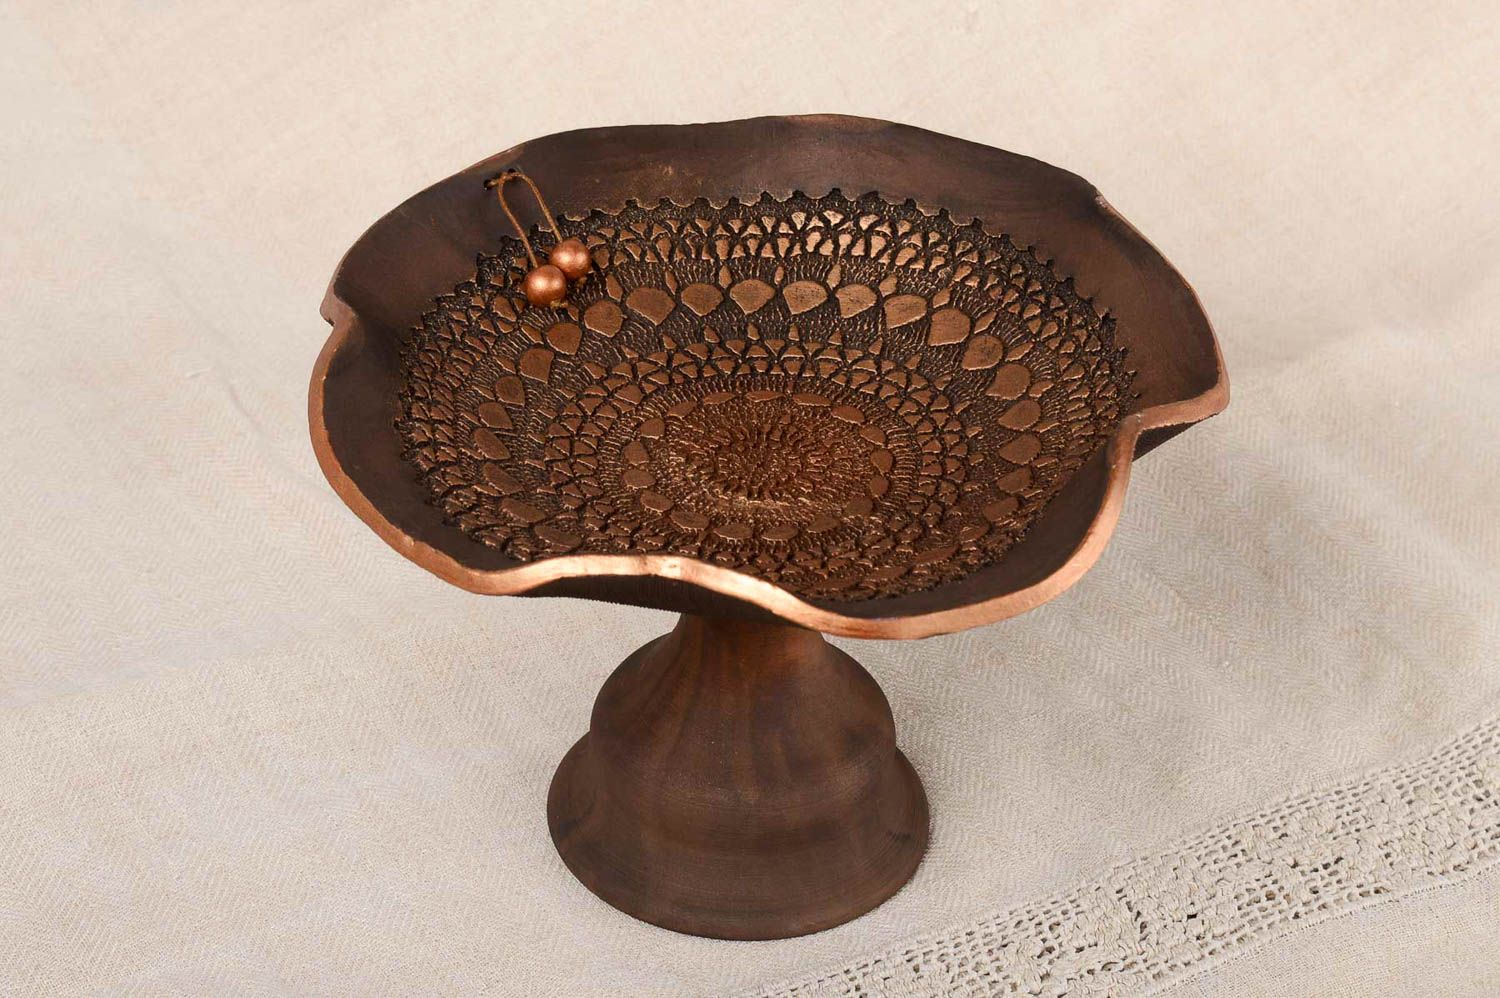 Unusual handmade ceramic fruit bowl tableware ideas pottery works gift ideas photo 1